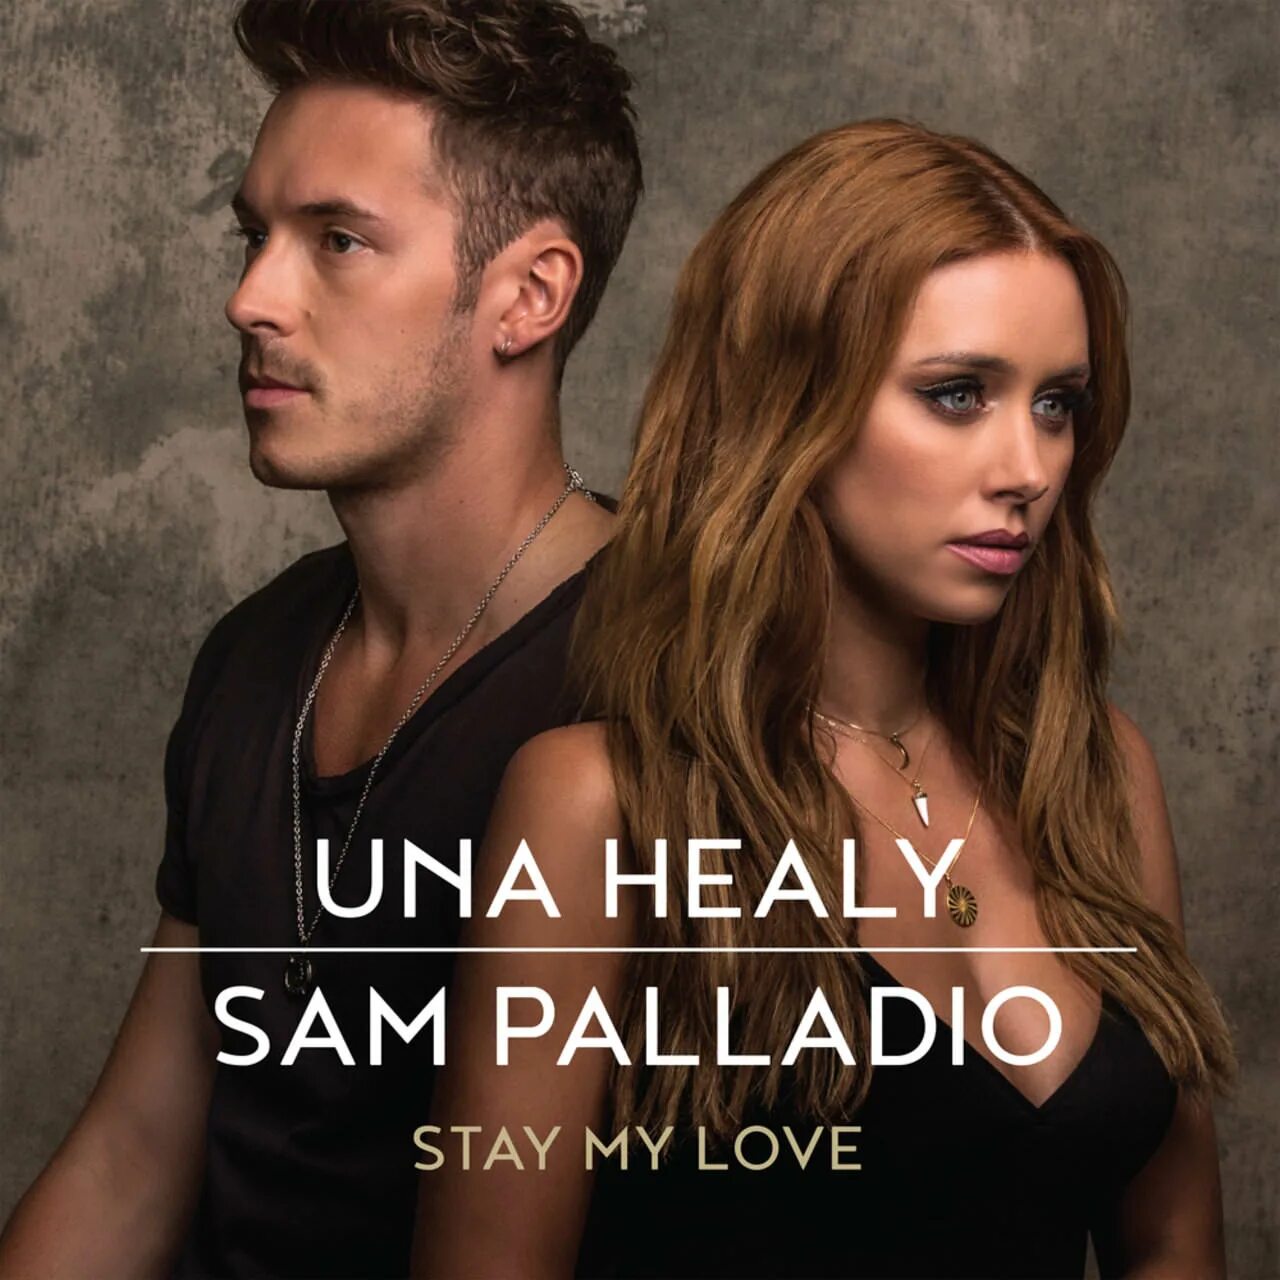 Featuring love. Stay my Love уна Хили. Sam Palladio певец. Stay кто исполняет. Love stay фото.